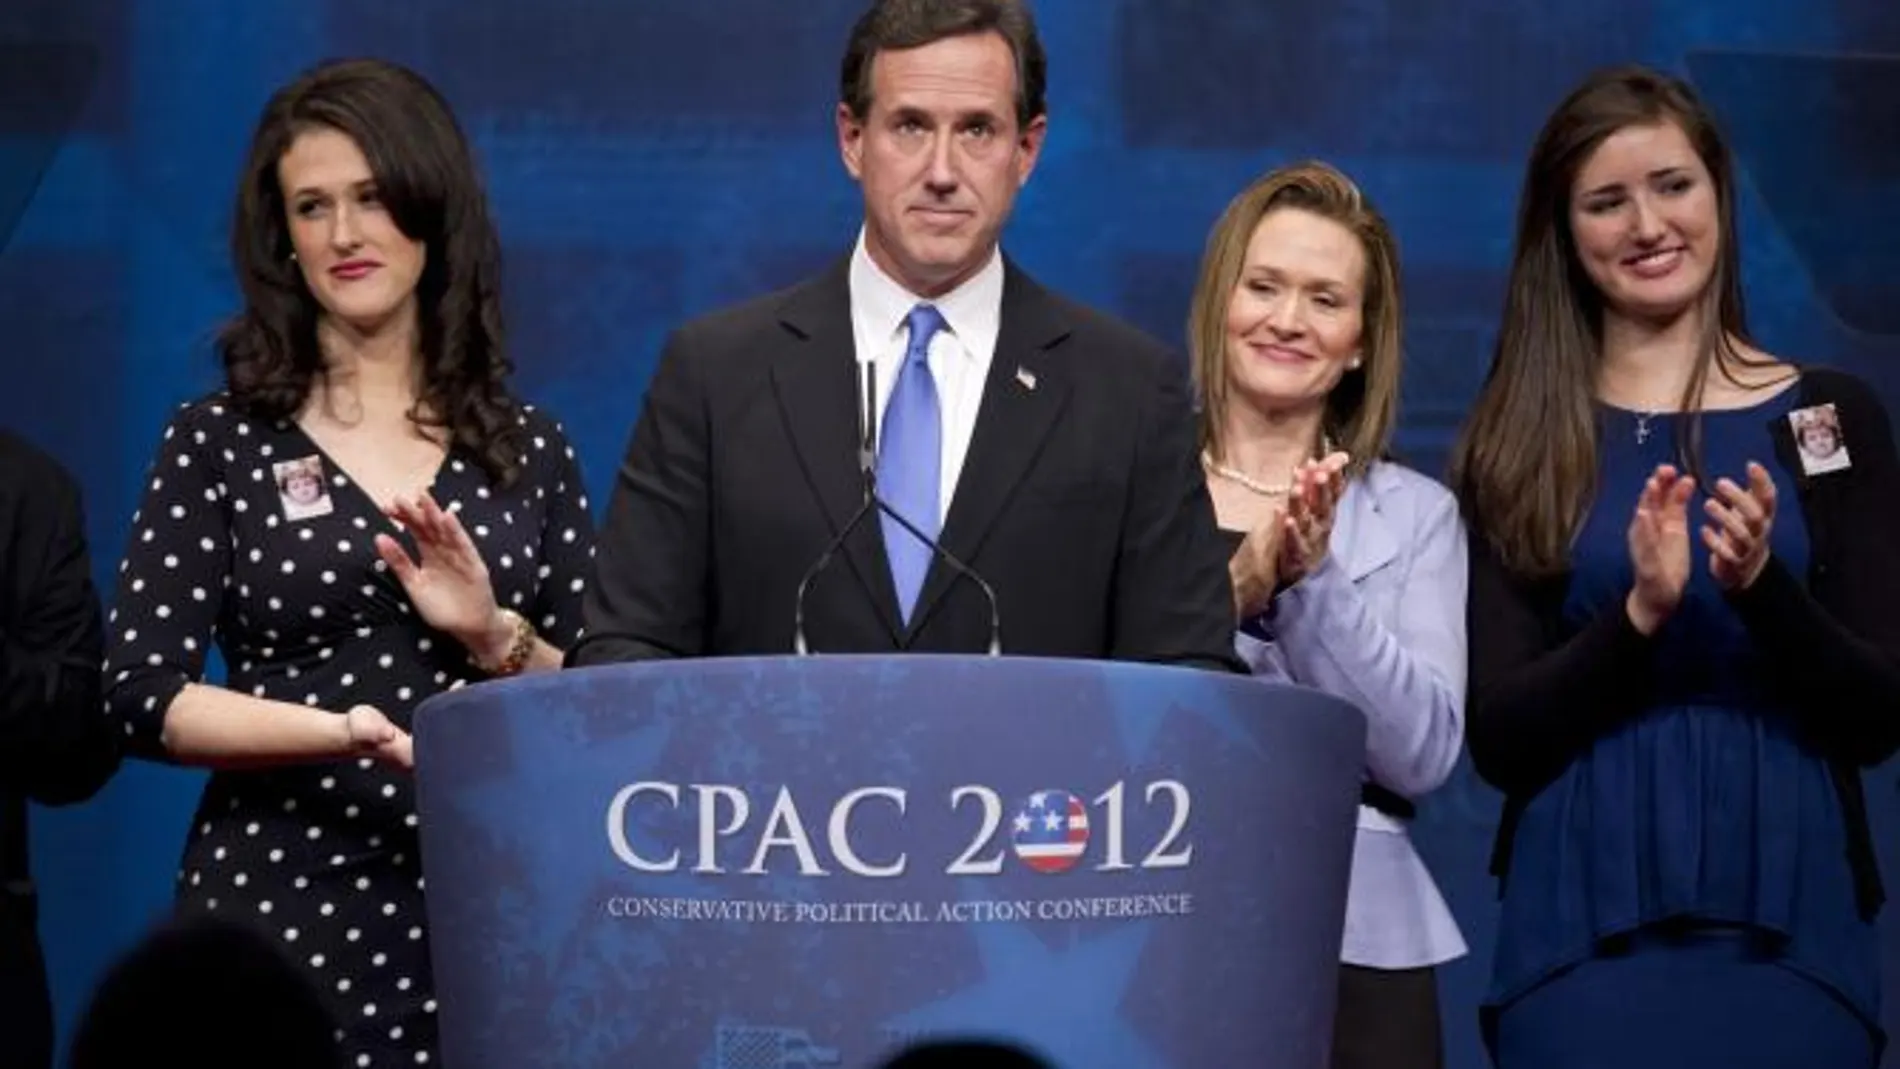 Rick Santorum un hombre de fe